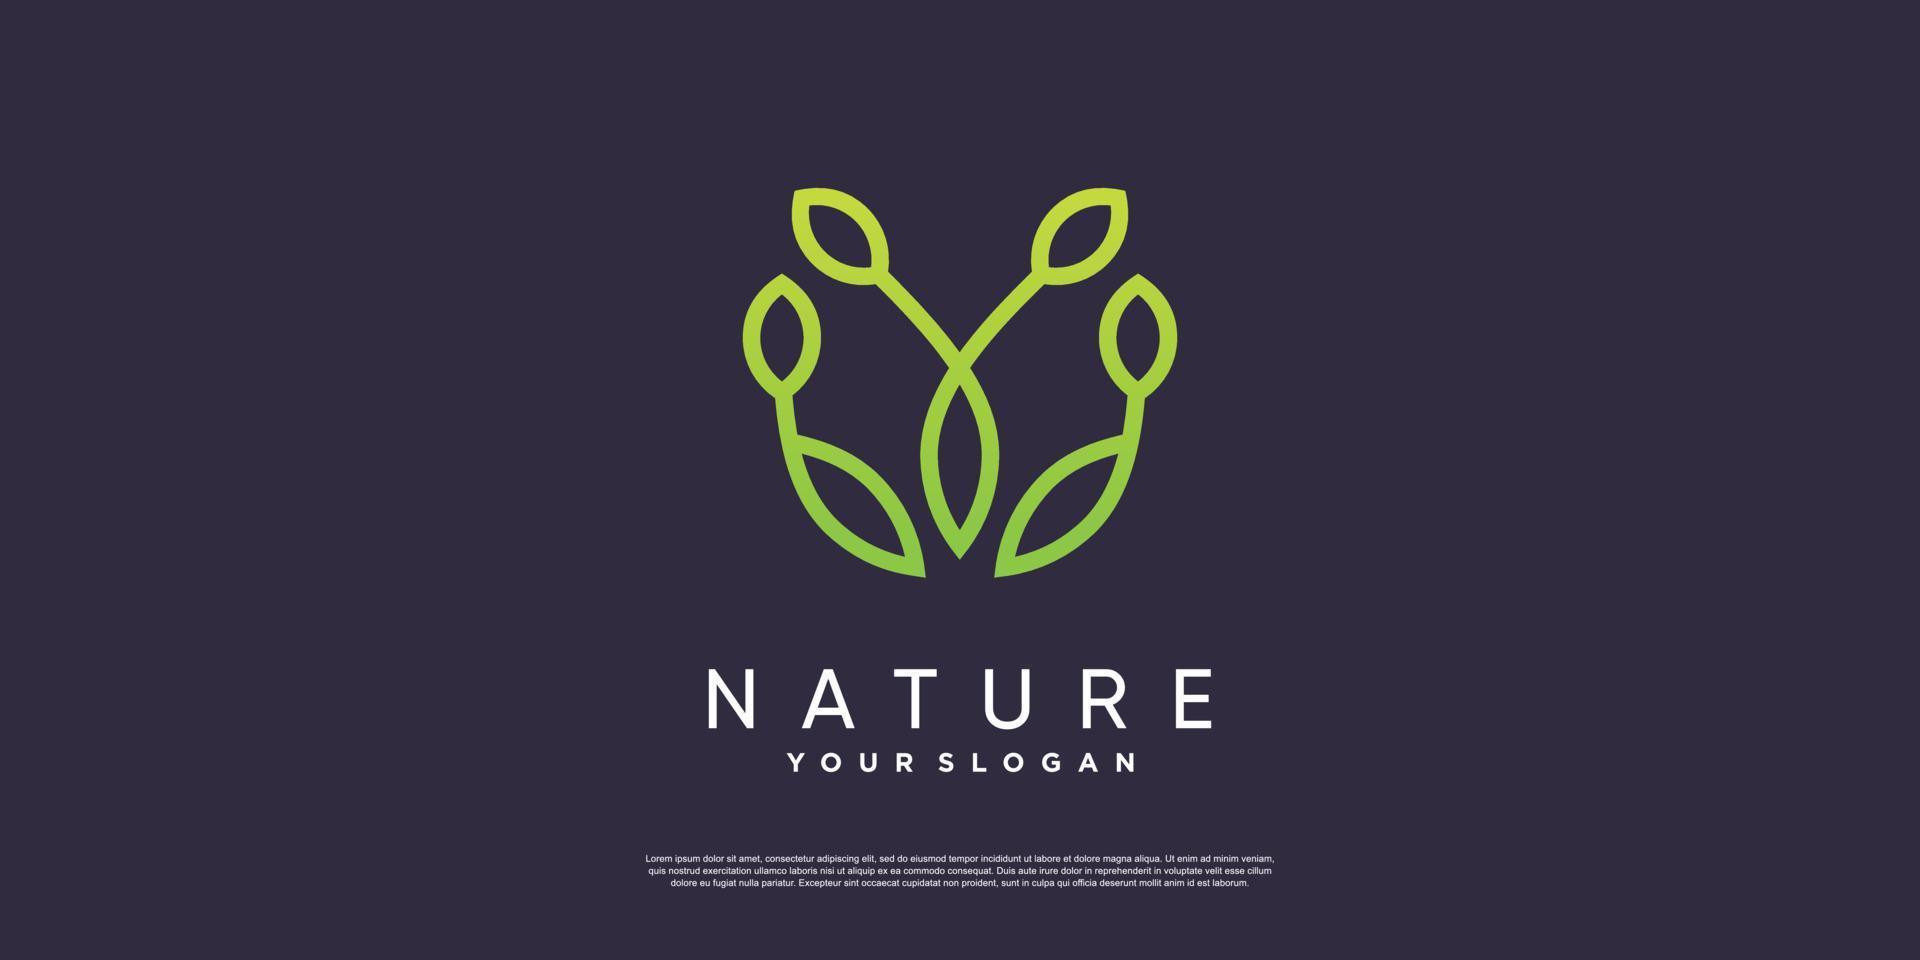 logotipo natural minimalista con vector premium de concepto de línea creativa